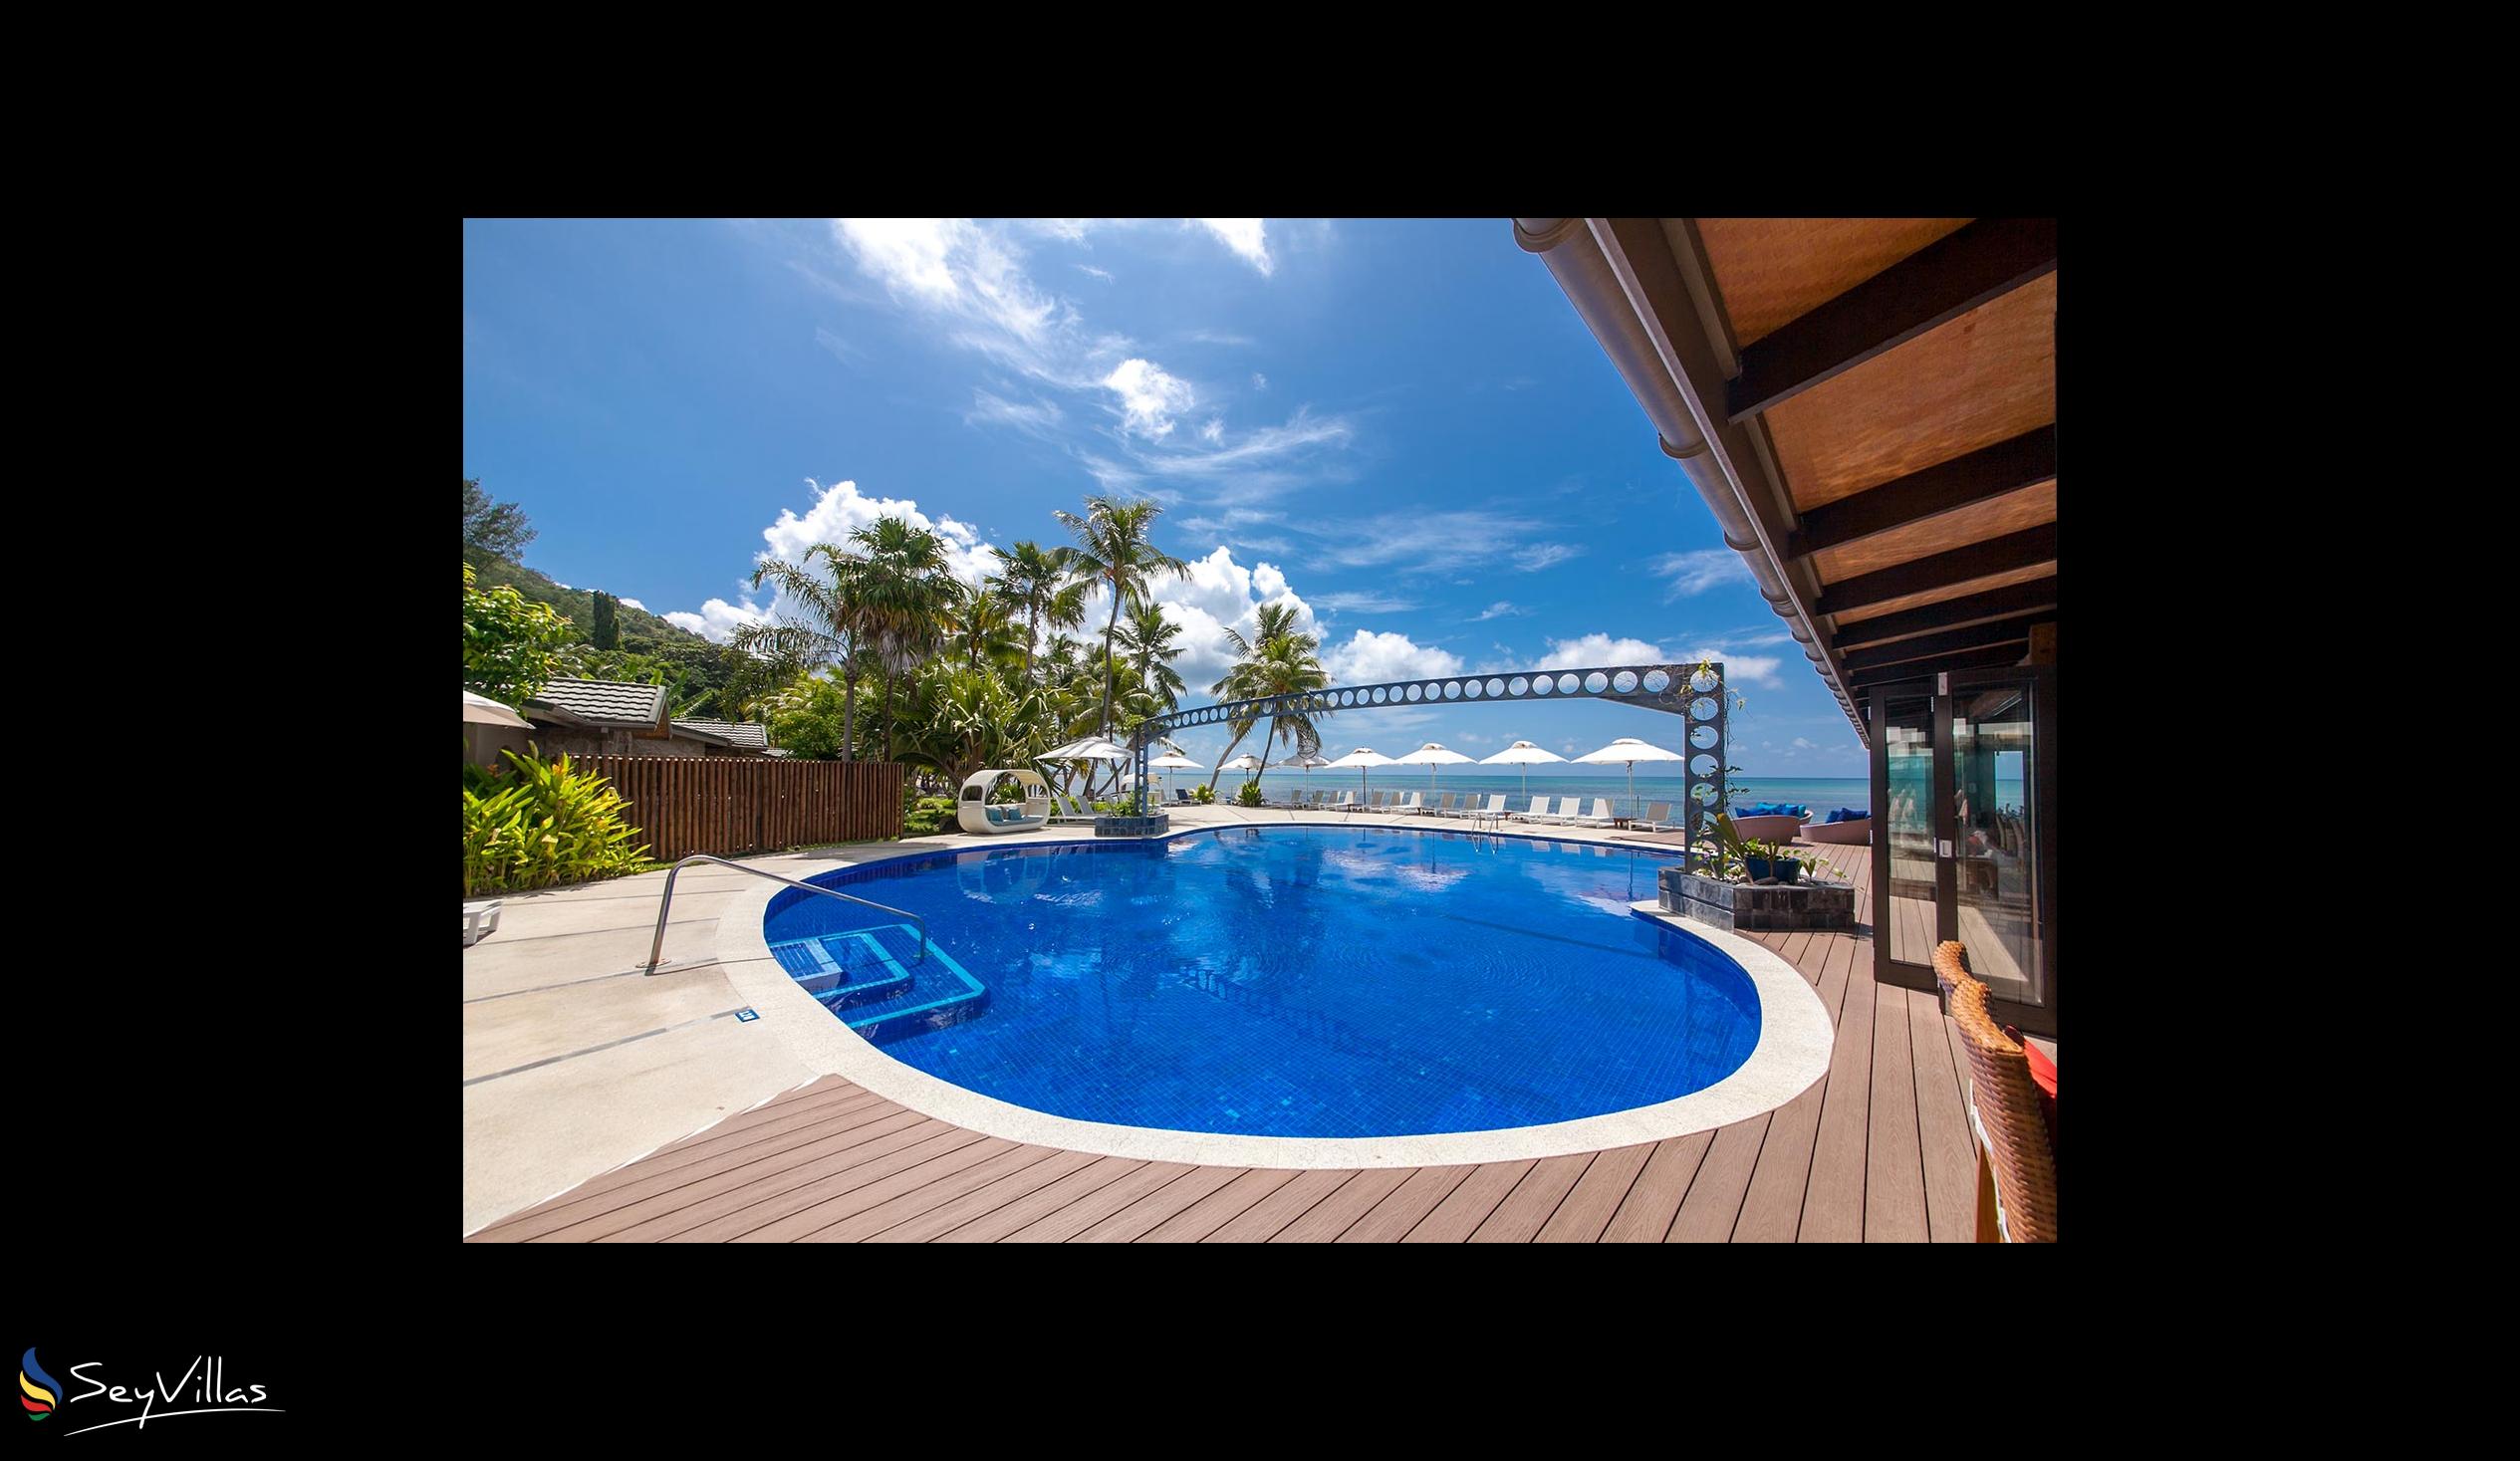 Photo 19: Coco de Mer & Black Parrot Suites - Outdoor area - Praslin (Seychelles)